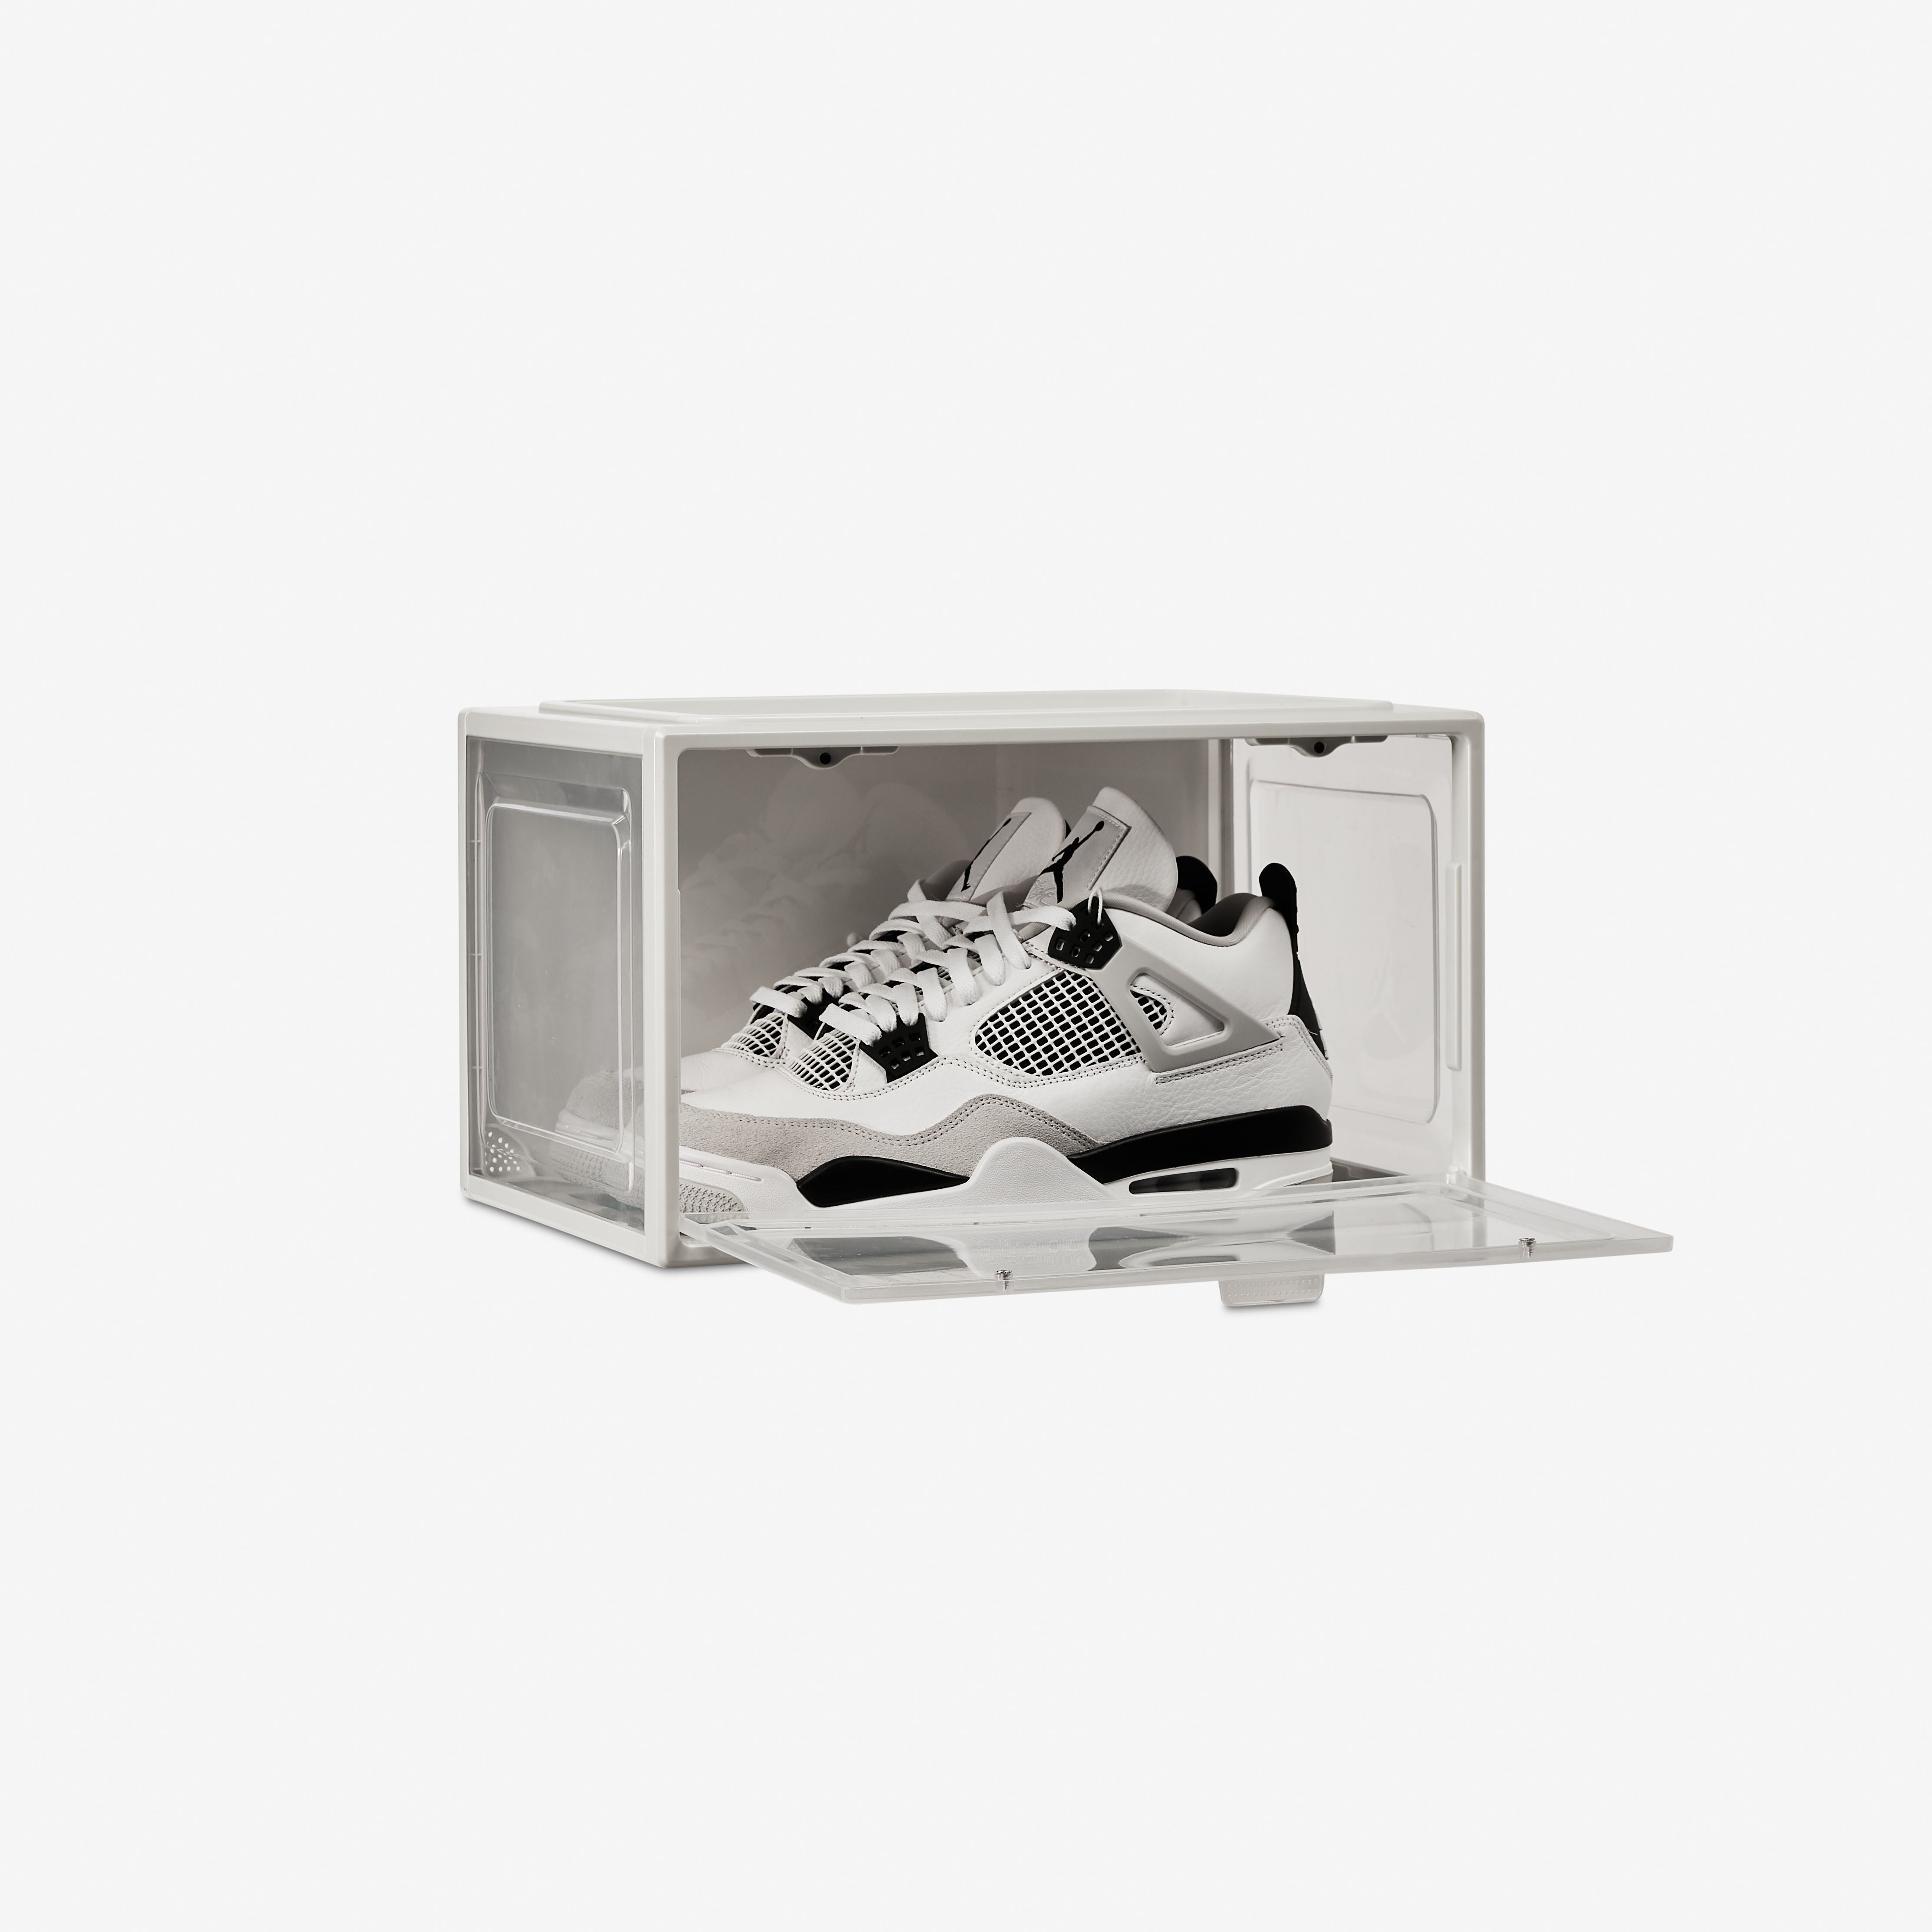 SoleCube - White Dropside Shoe Display Storage Box